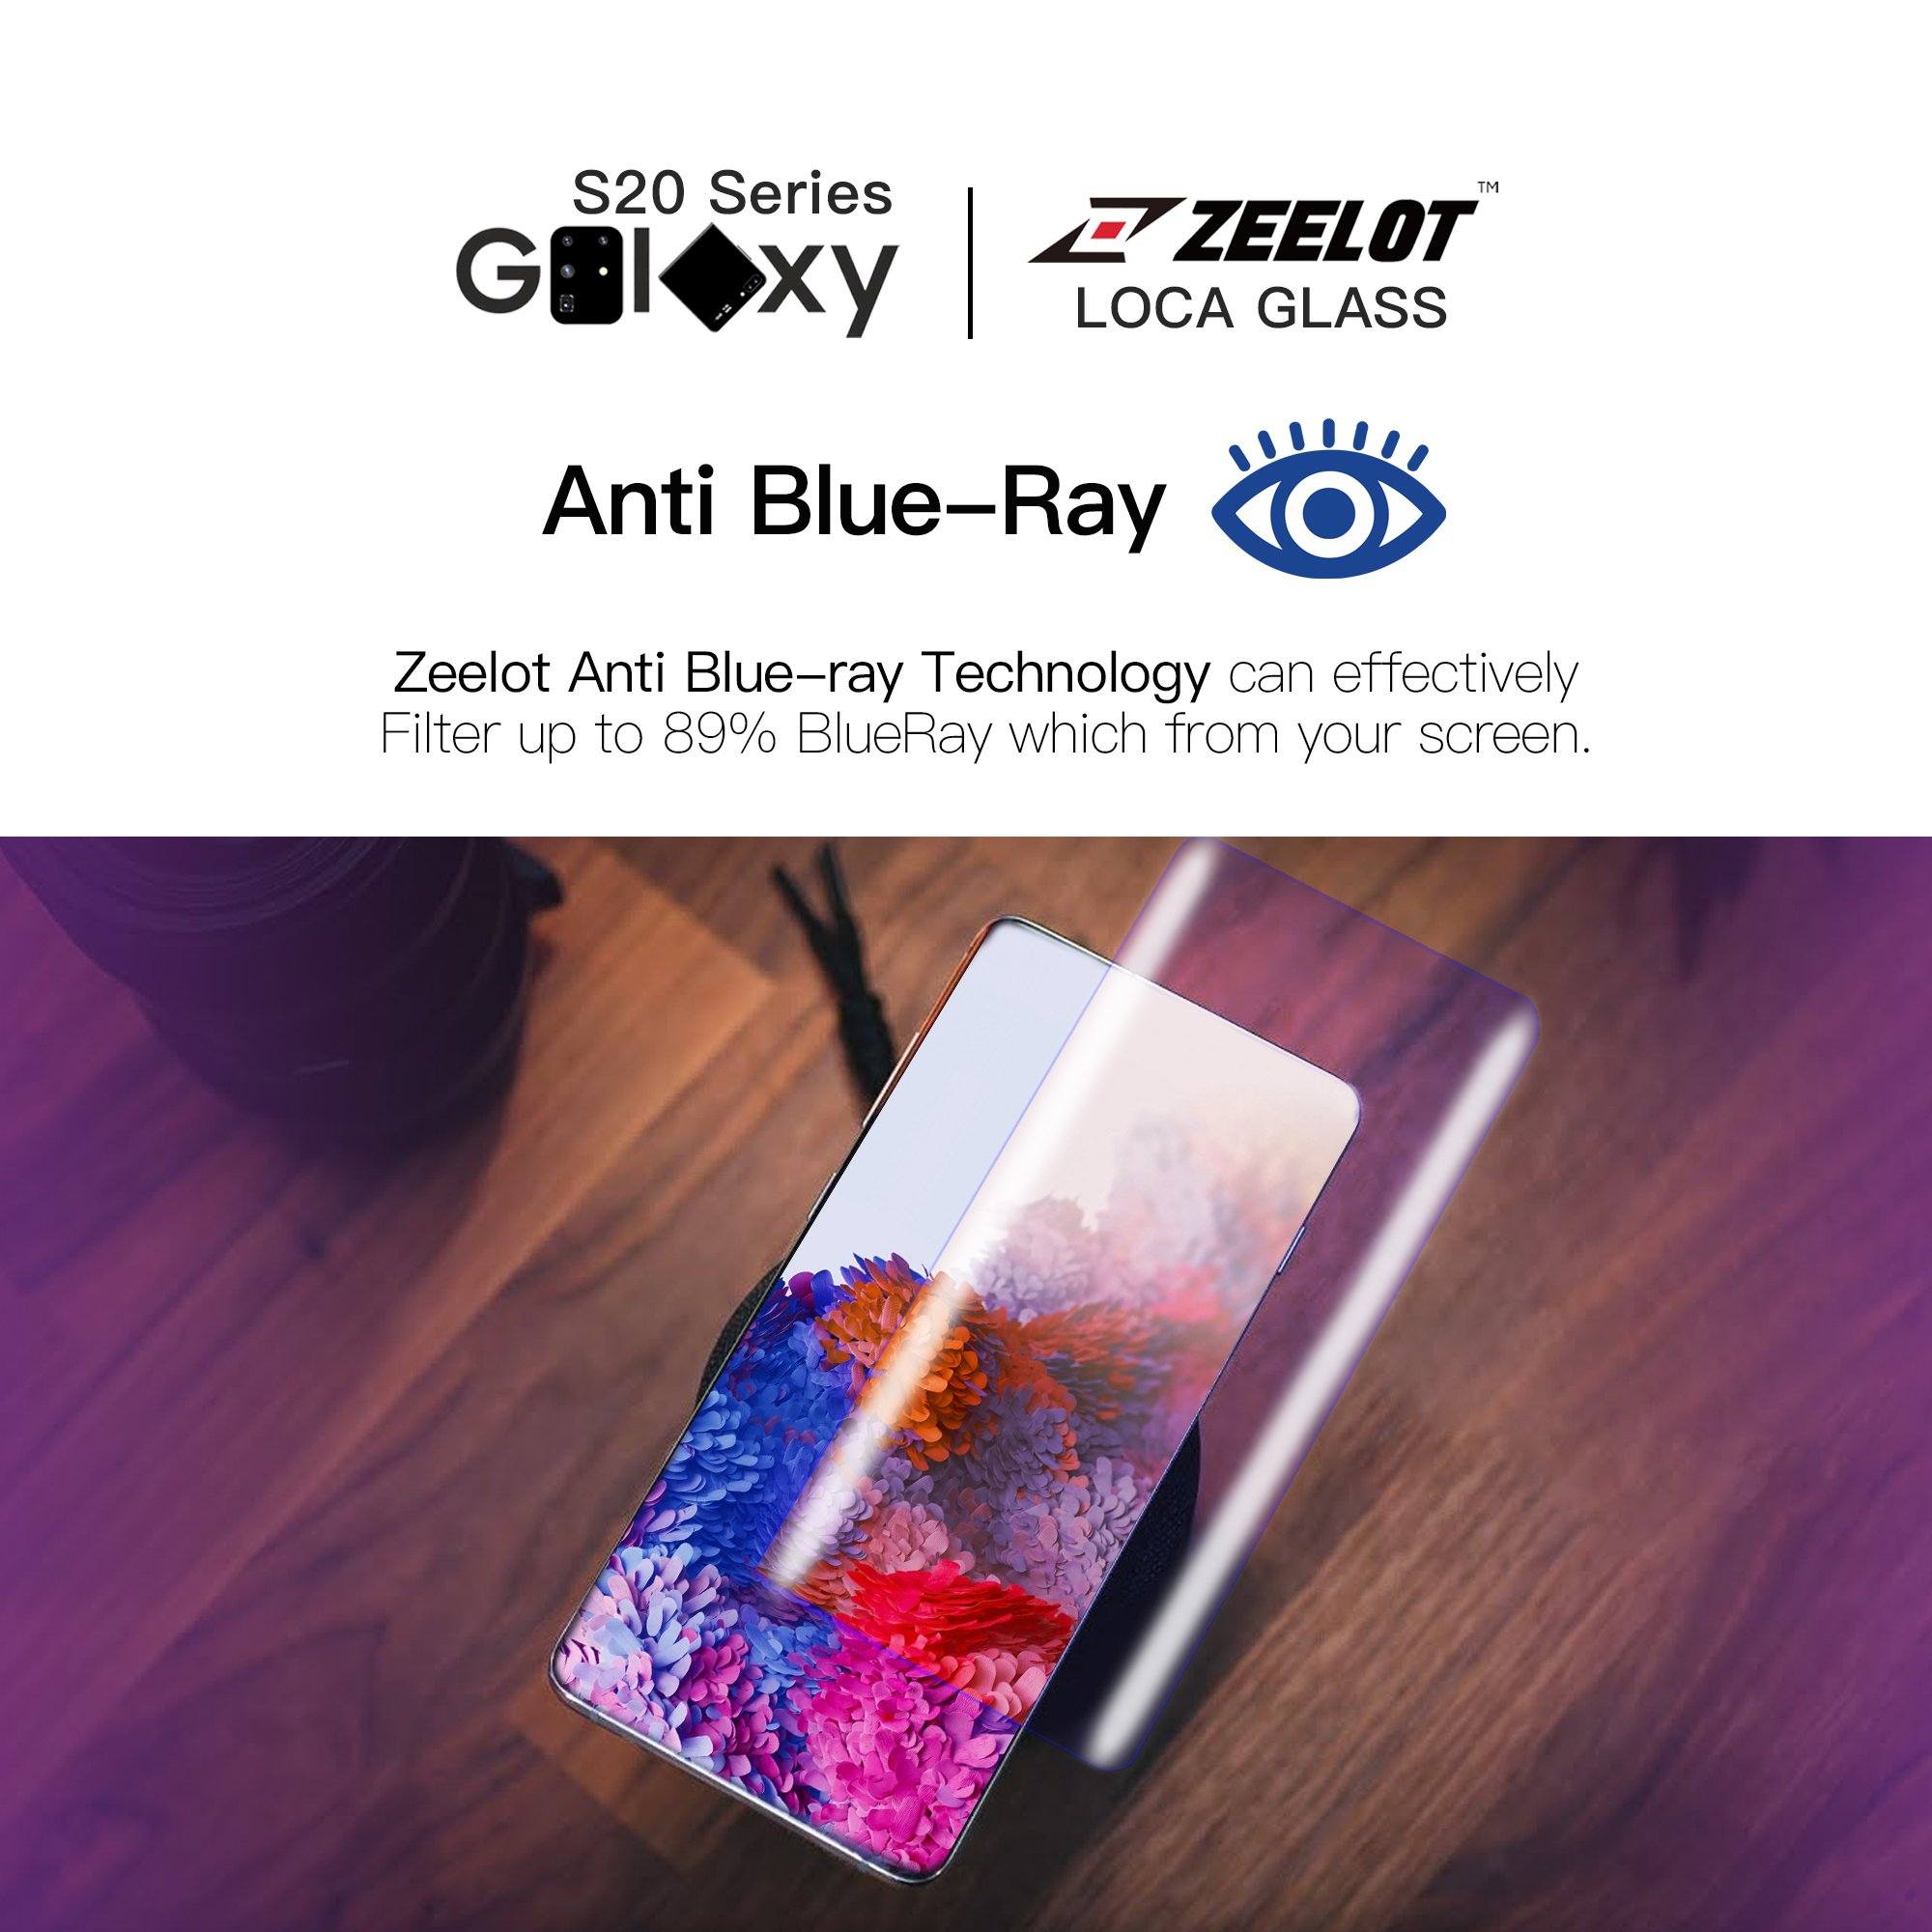 ZEELOT PureGlass 3D Anti Blue LOCA Corning Tempered Glass Screen Protector for Samsung Galaxy S20+ Anti-Blue Ray Loca Glue Zeelot 